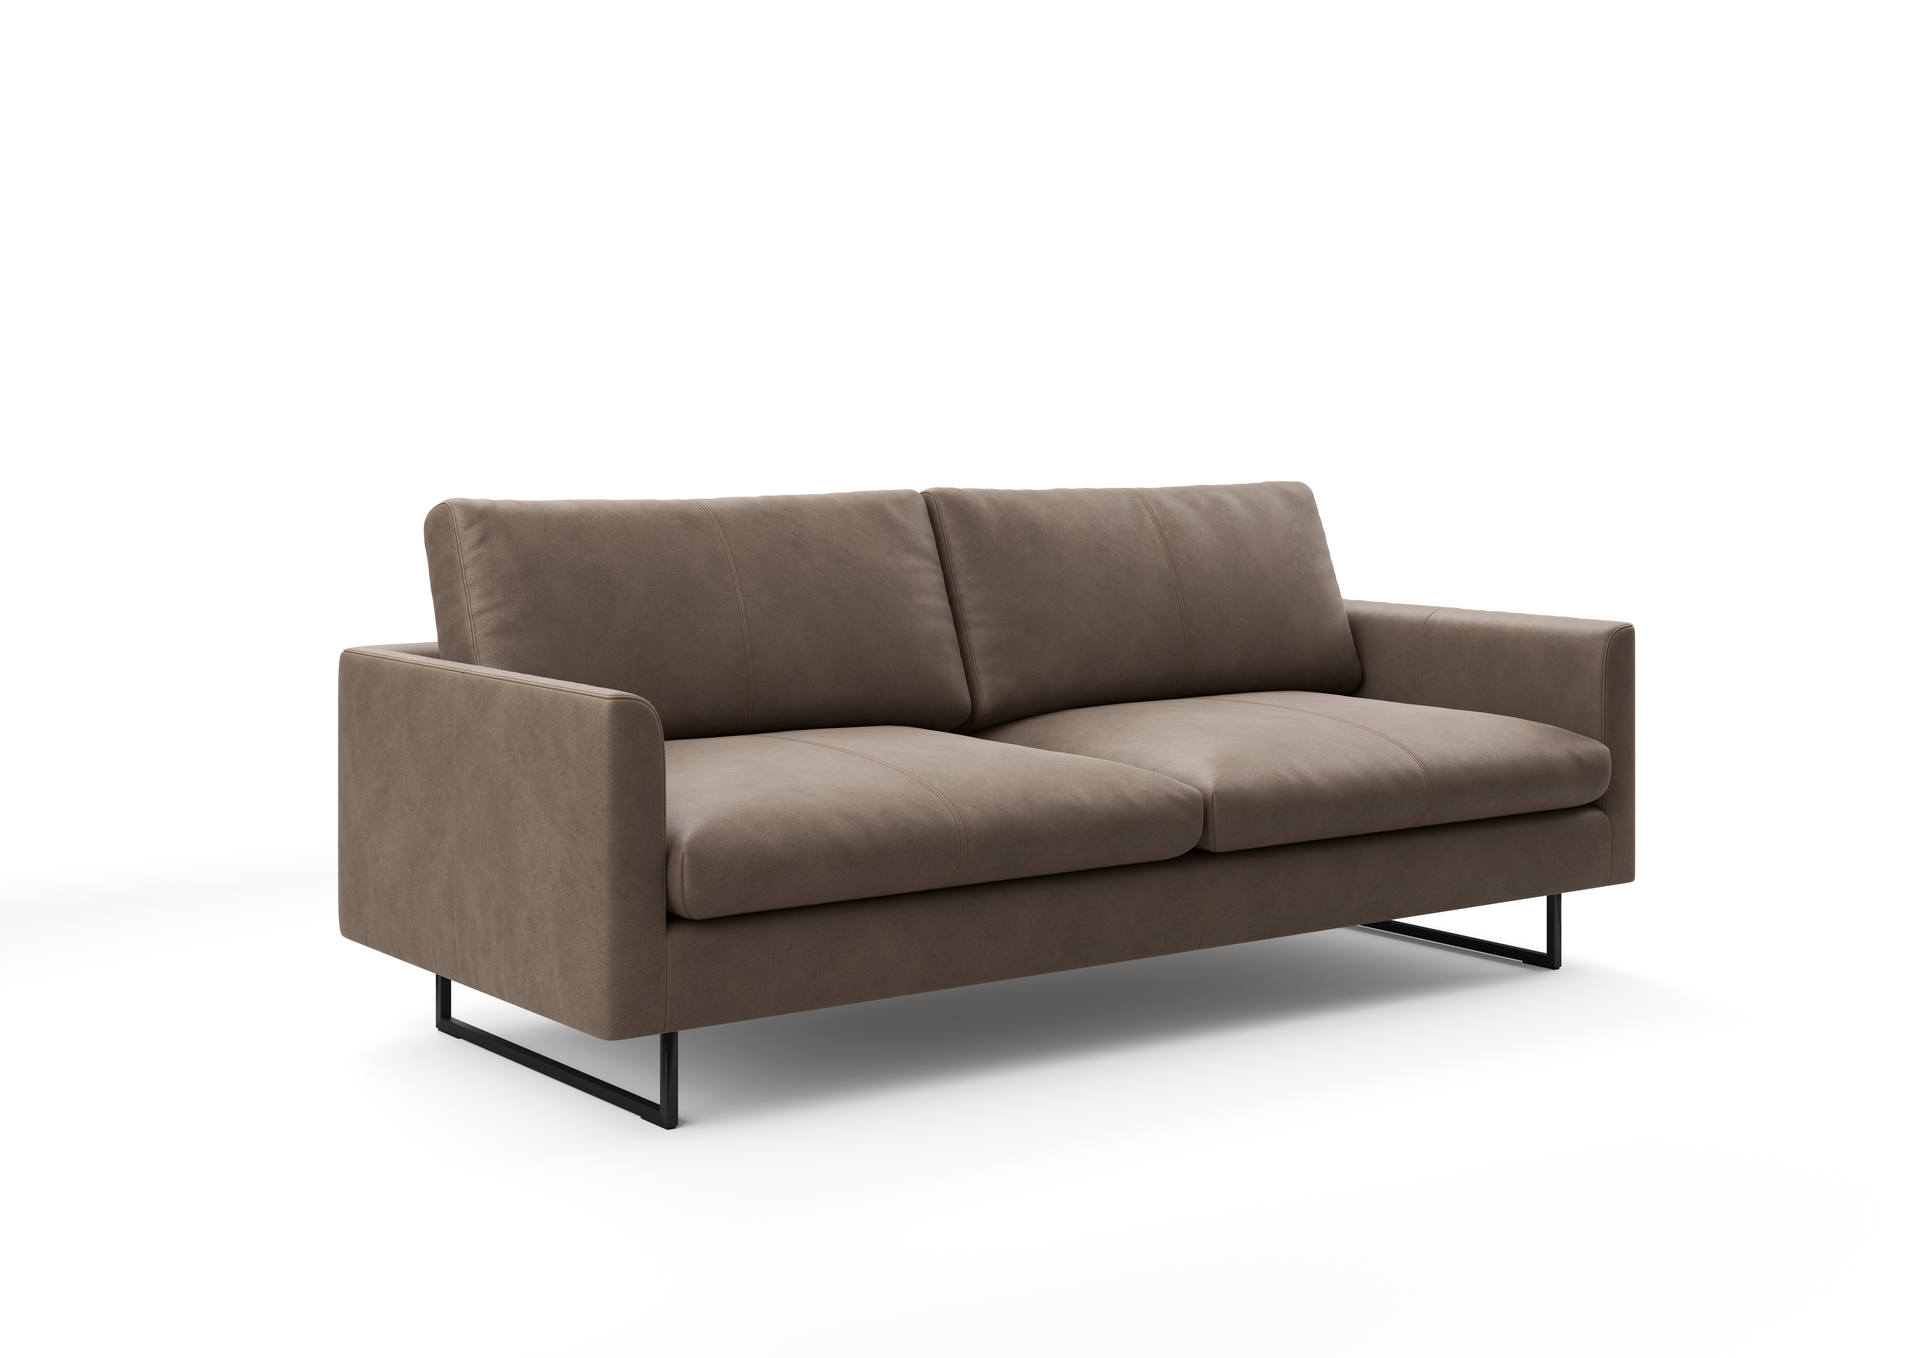 Freistil by Rolf Benz 134 Sofa in brown grey leather